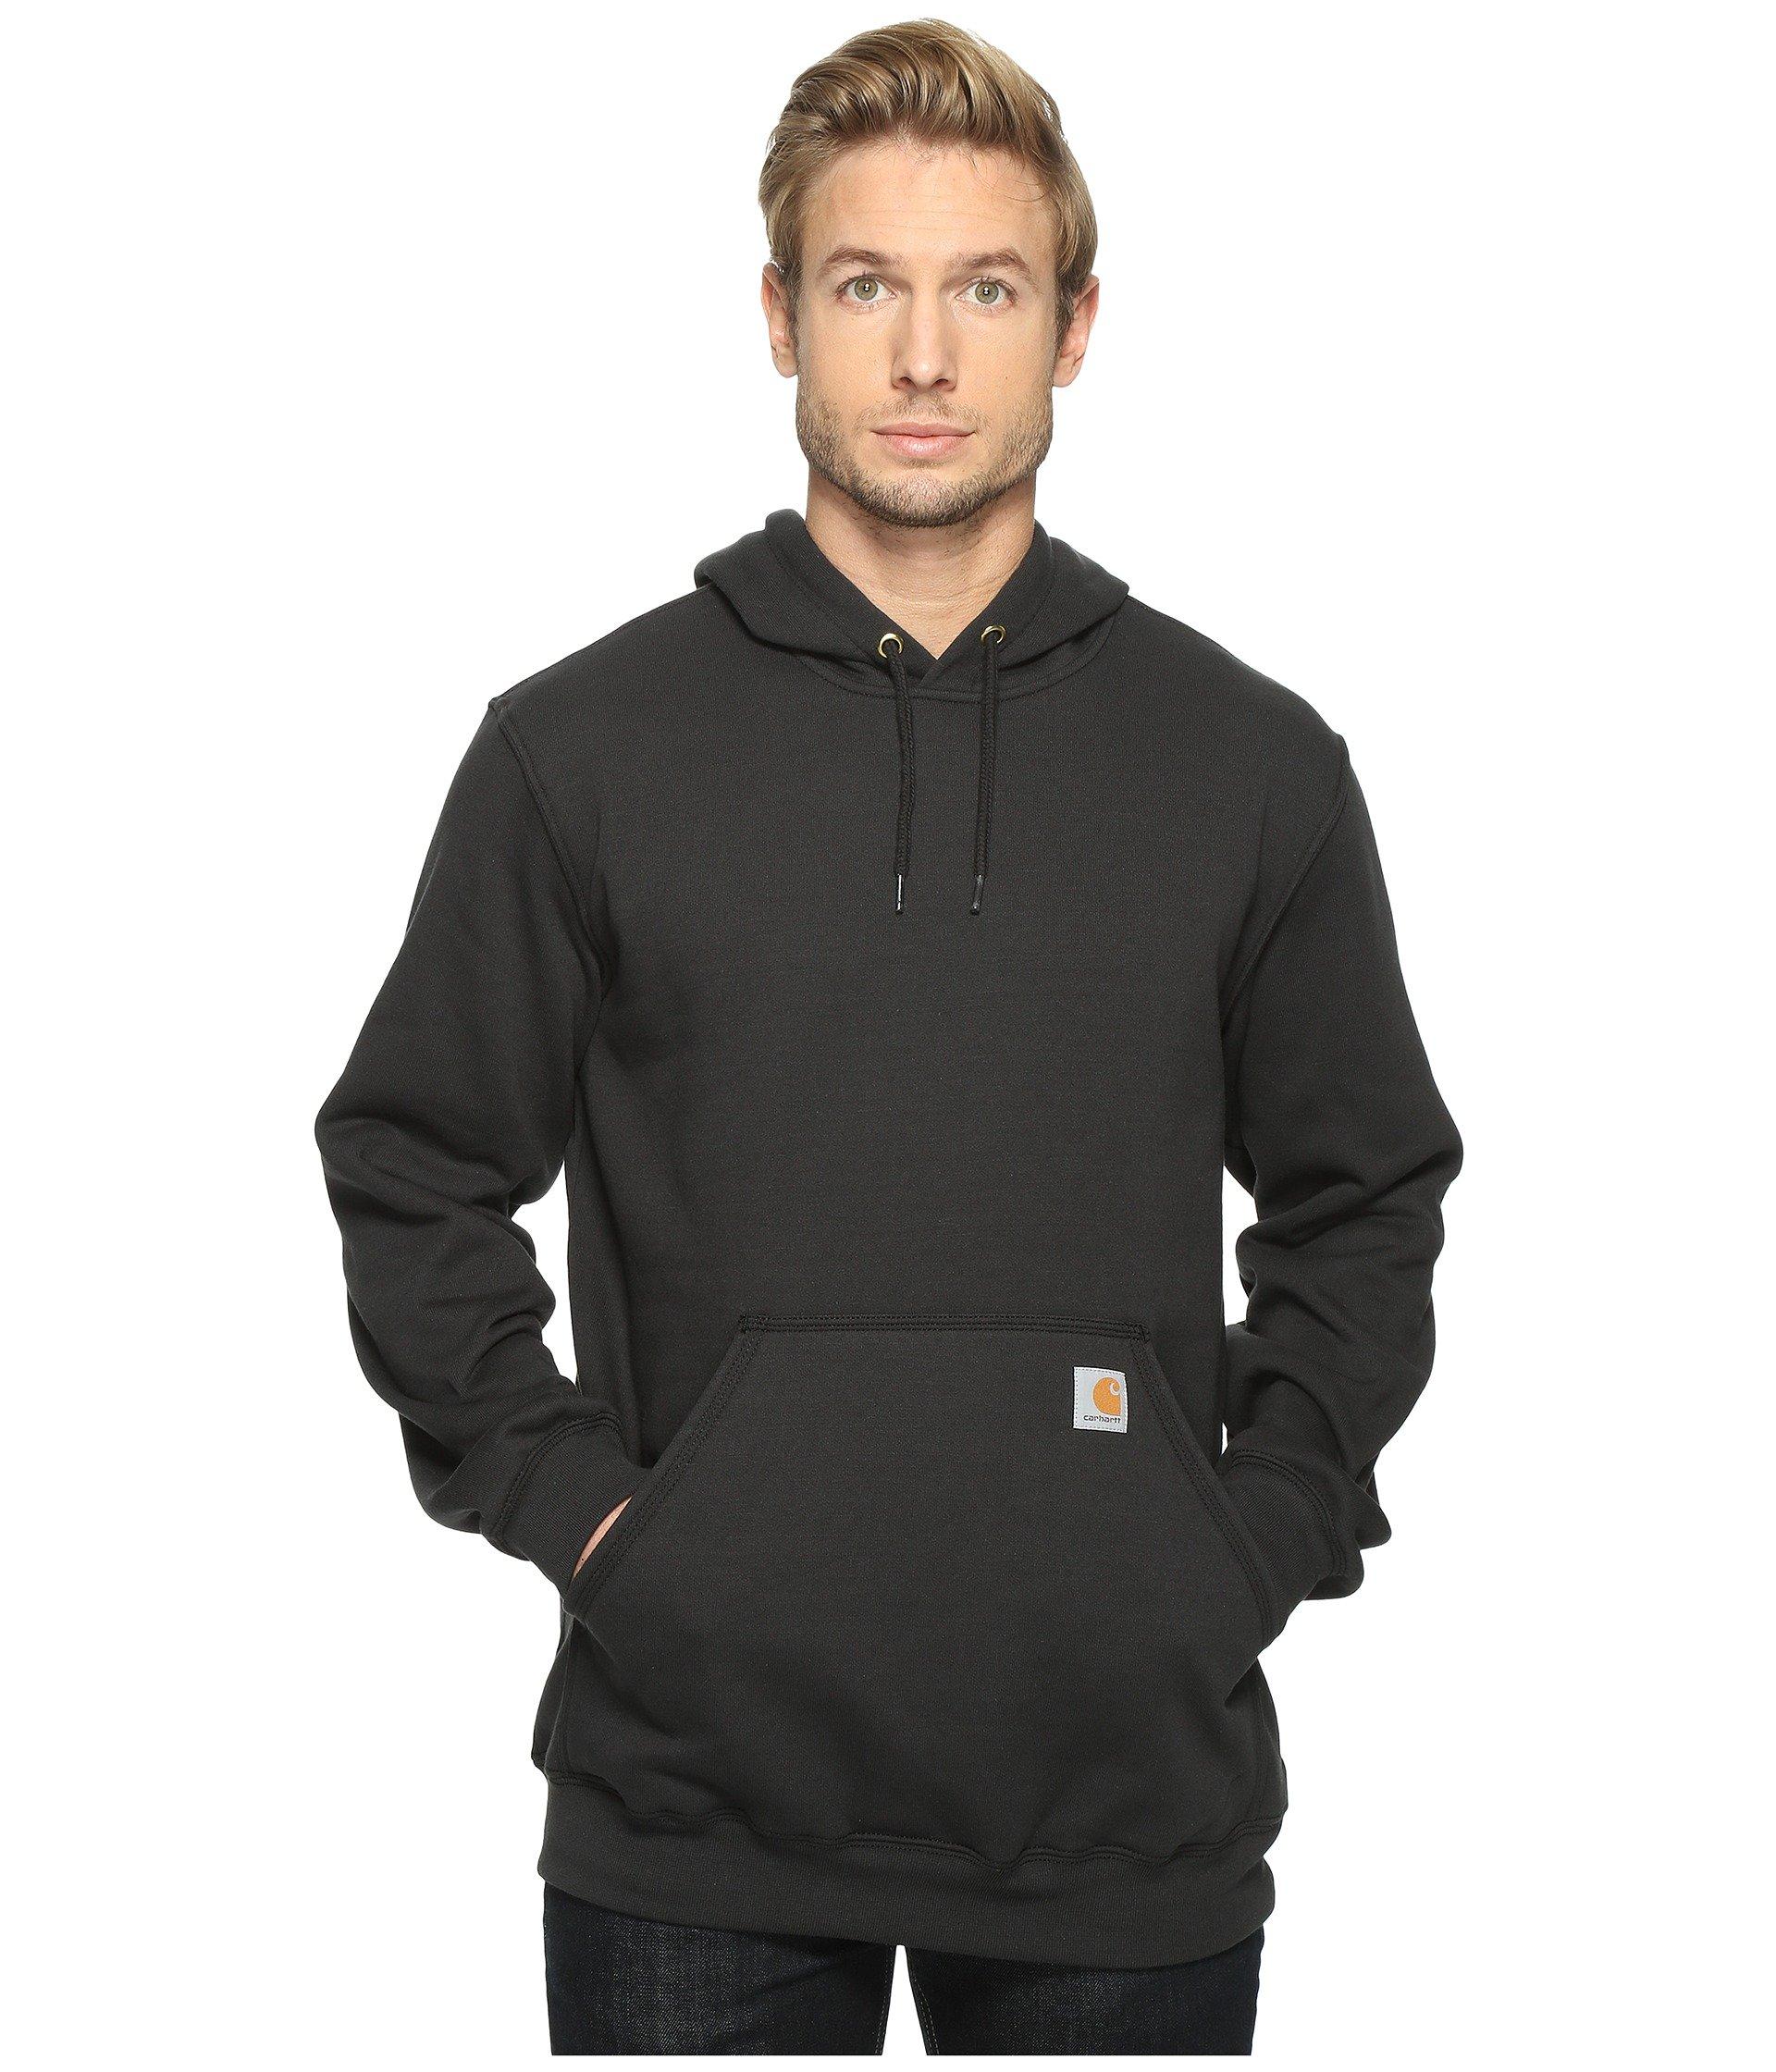 Carhartt Cotton Mw Hooded Sweatshirt in Black for Men - Lyst